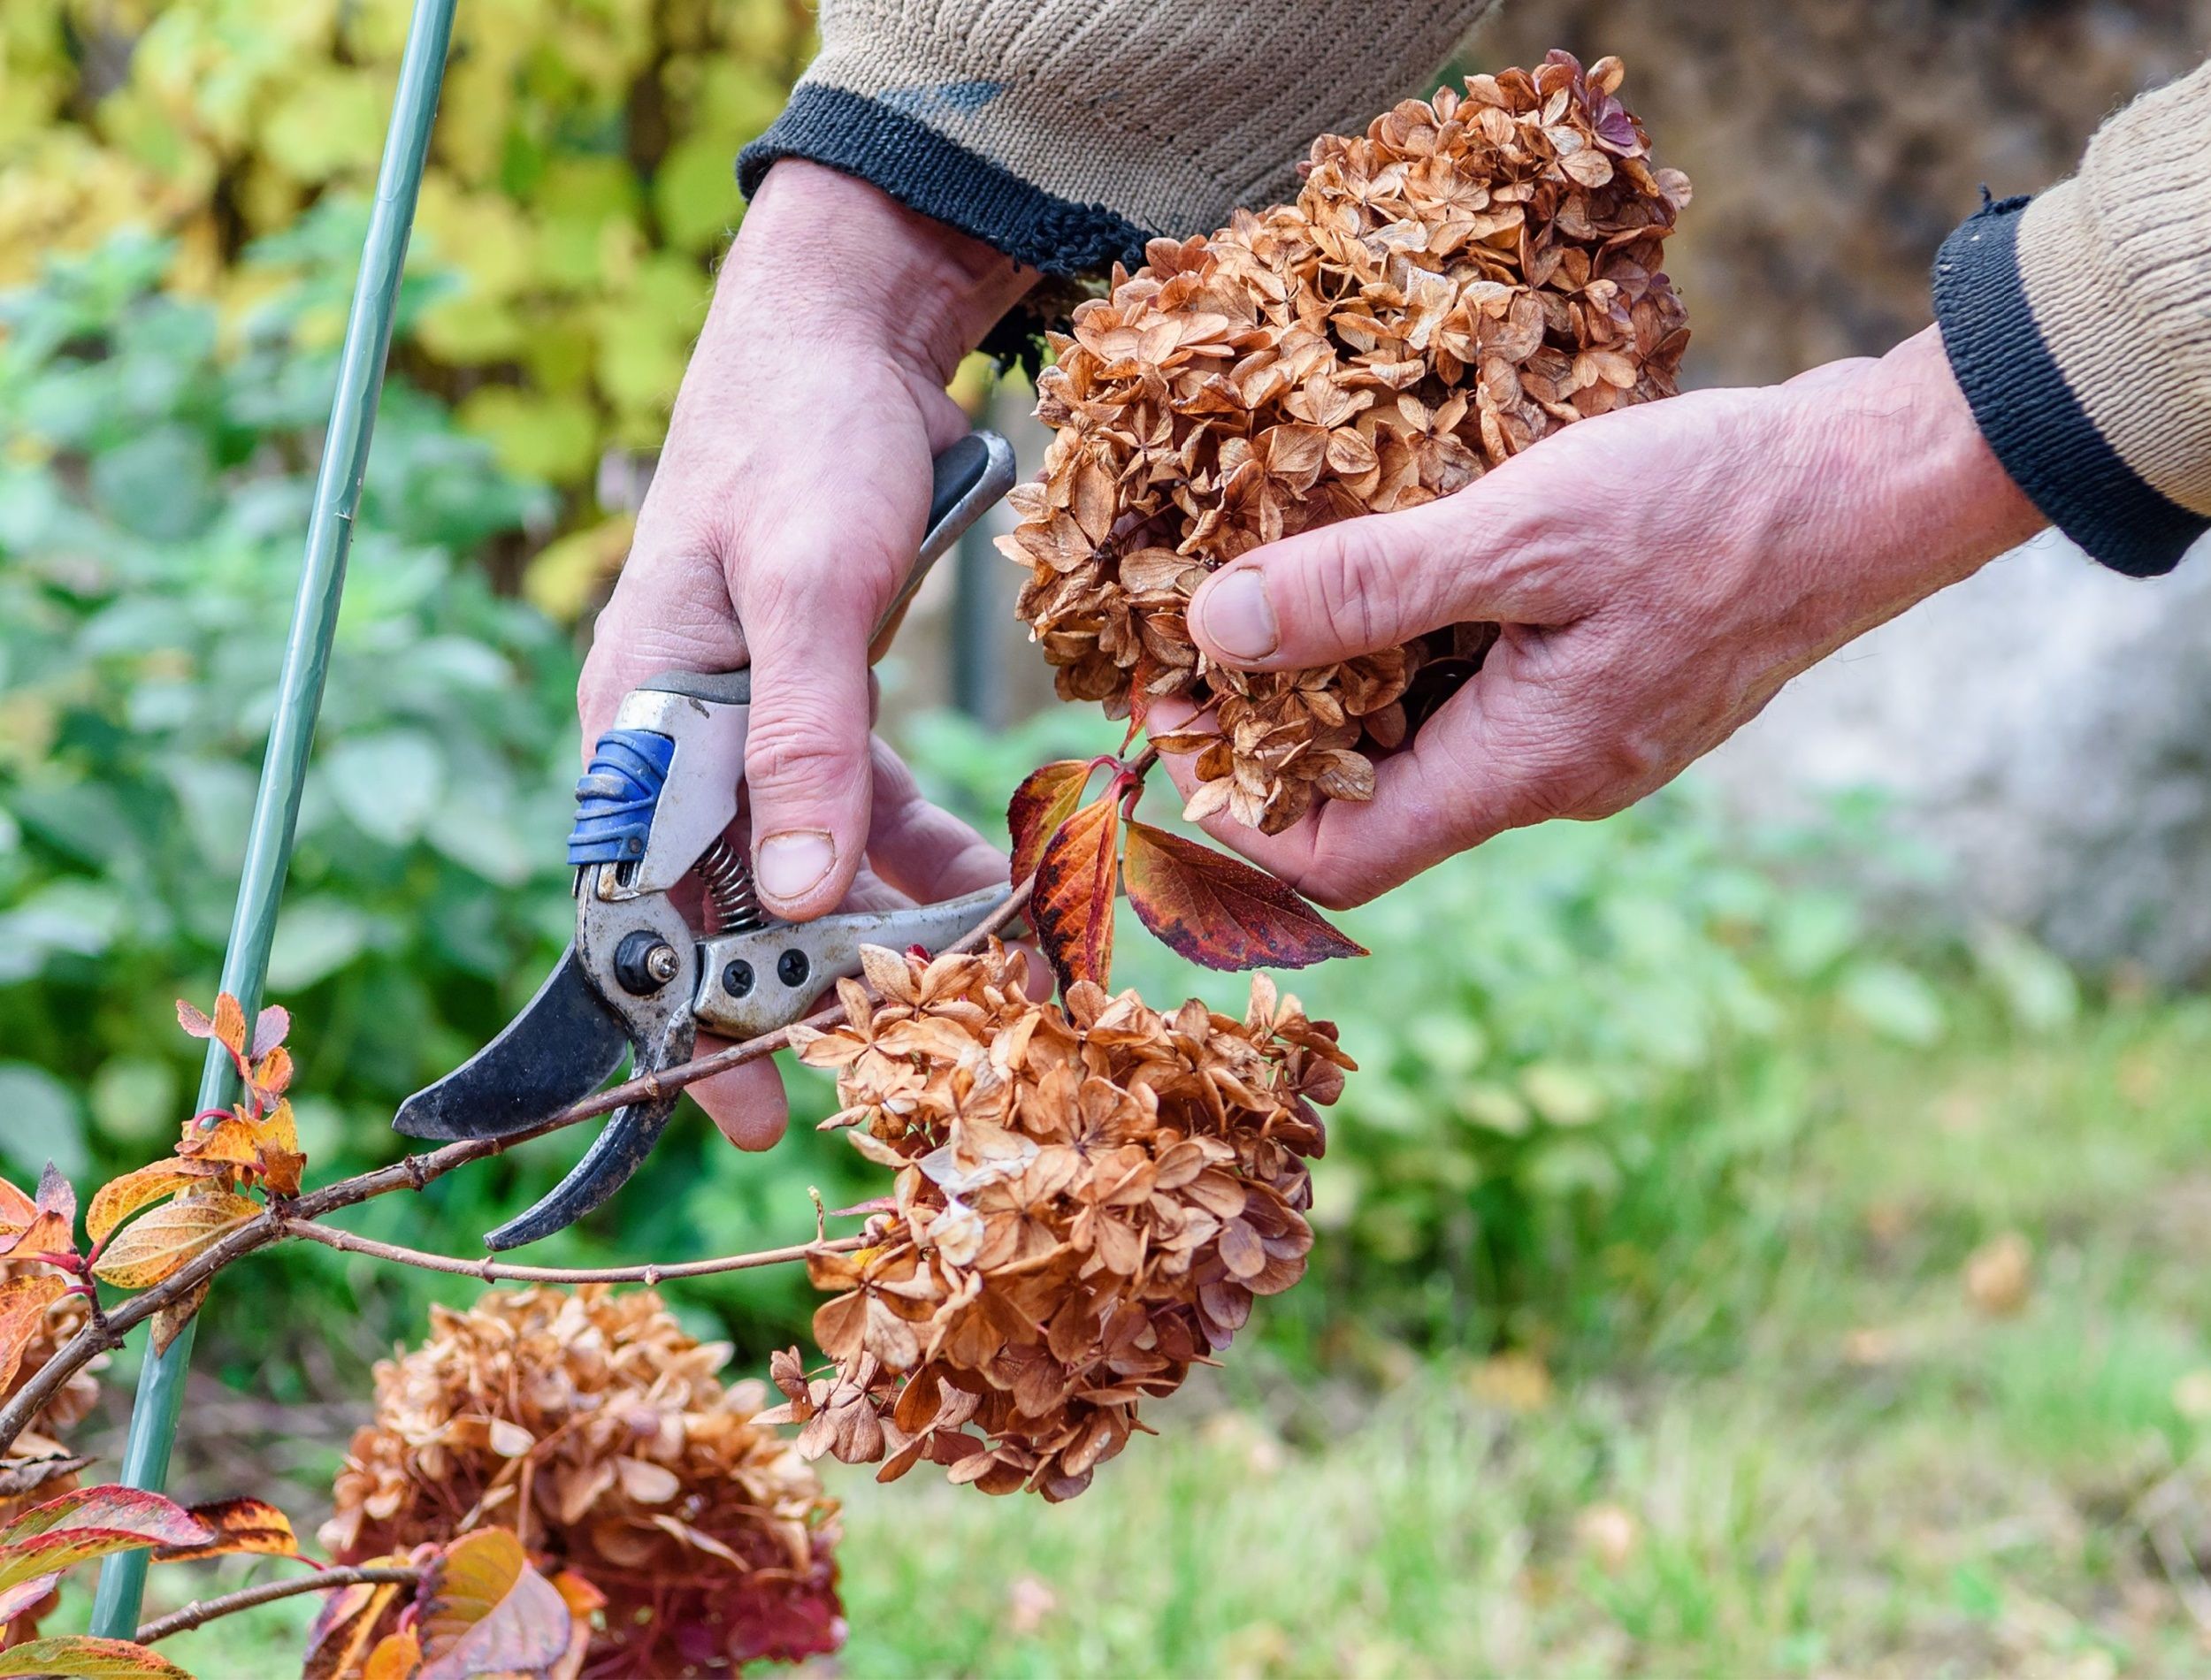 Pruning of dried flowers in the autumn garden. A gardener cuts a perennial hydrangea bush in his garden during the autumn season.